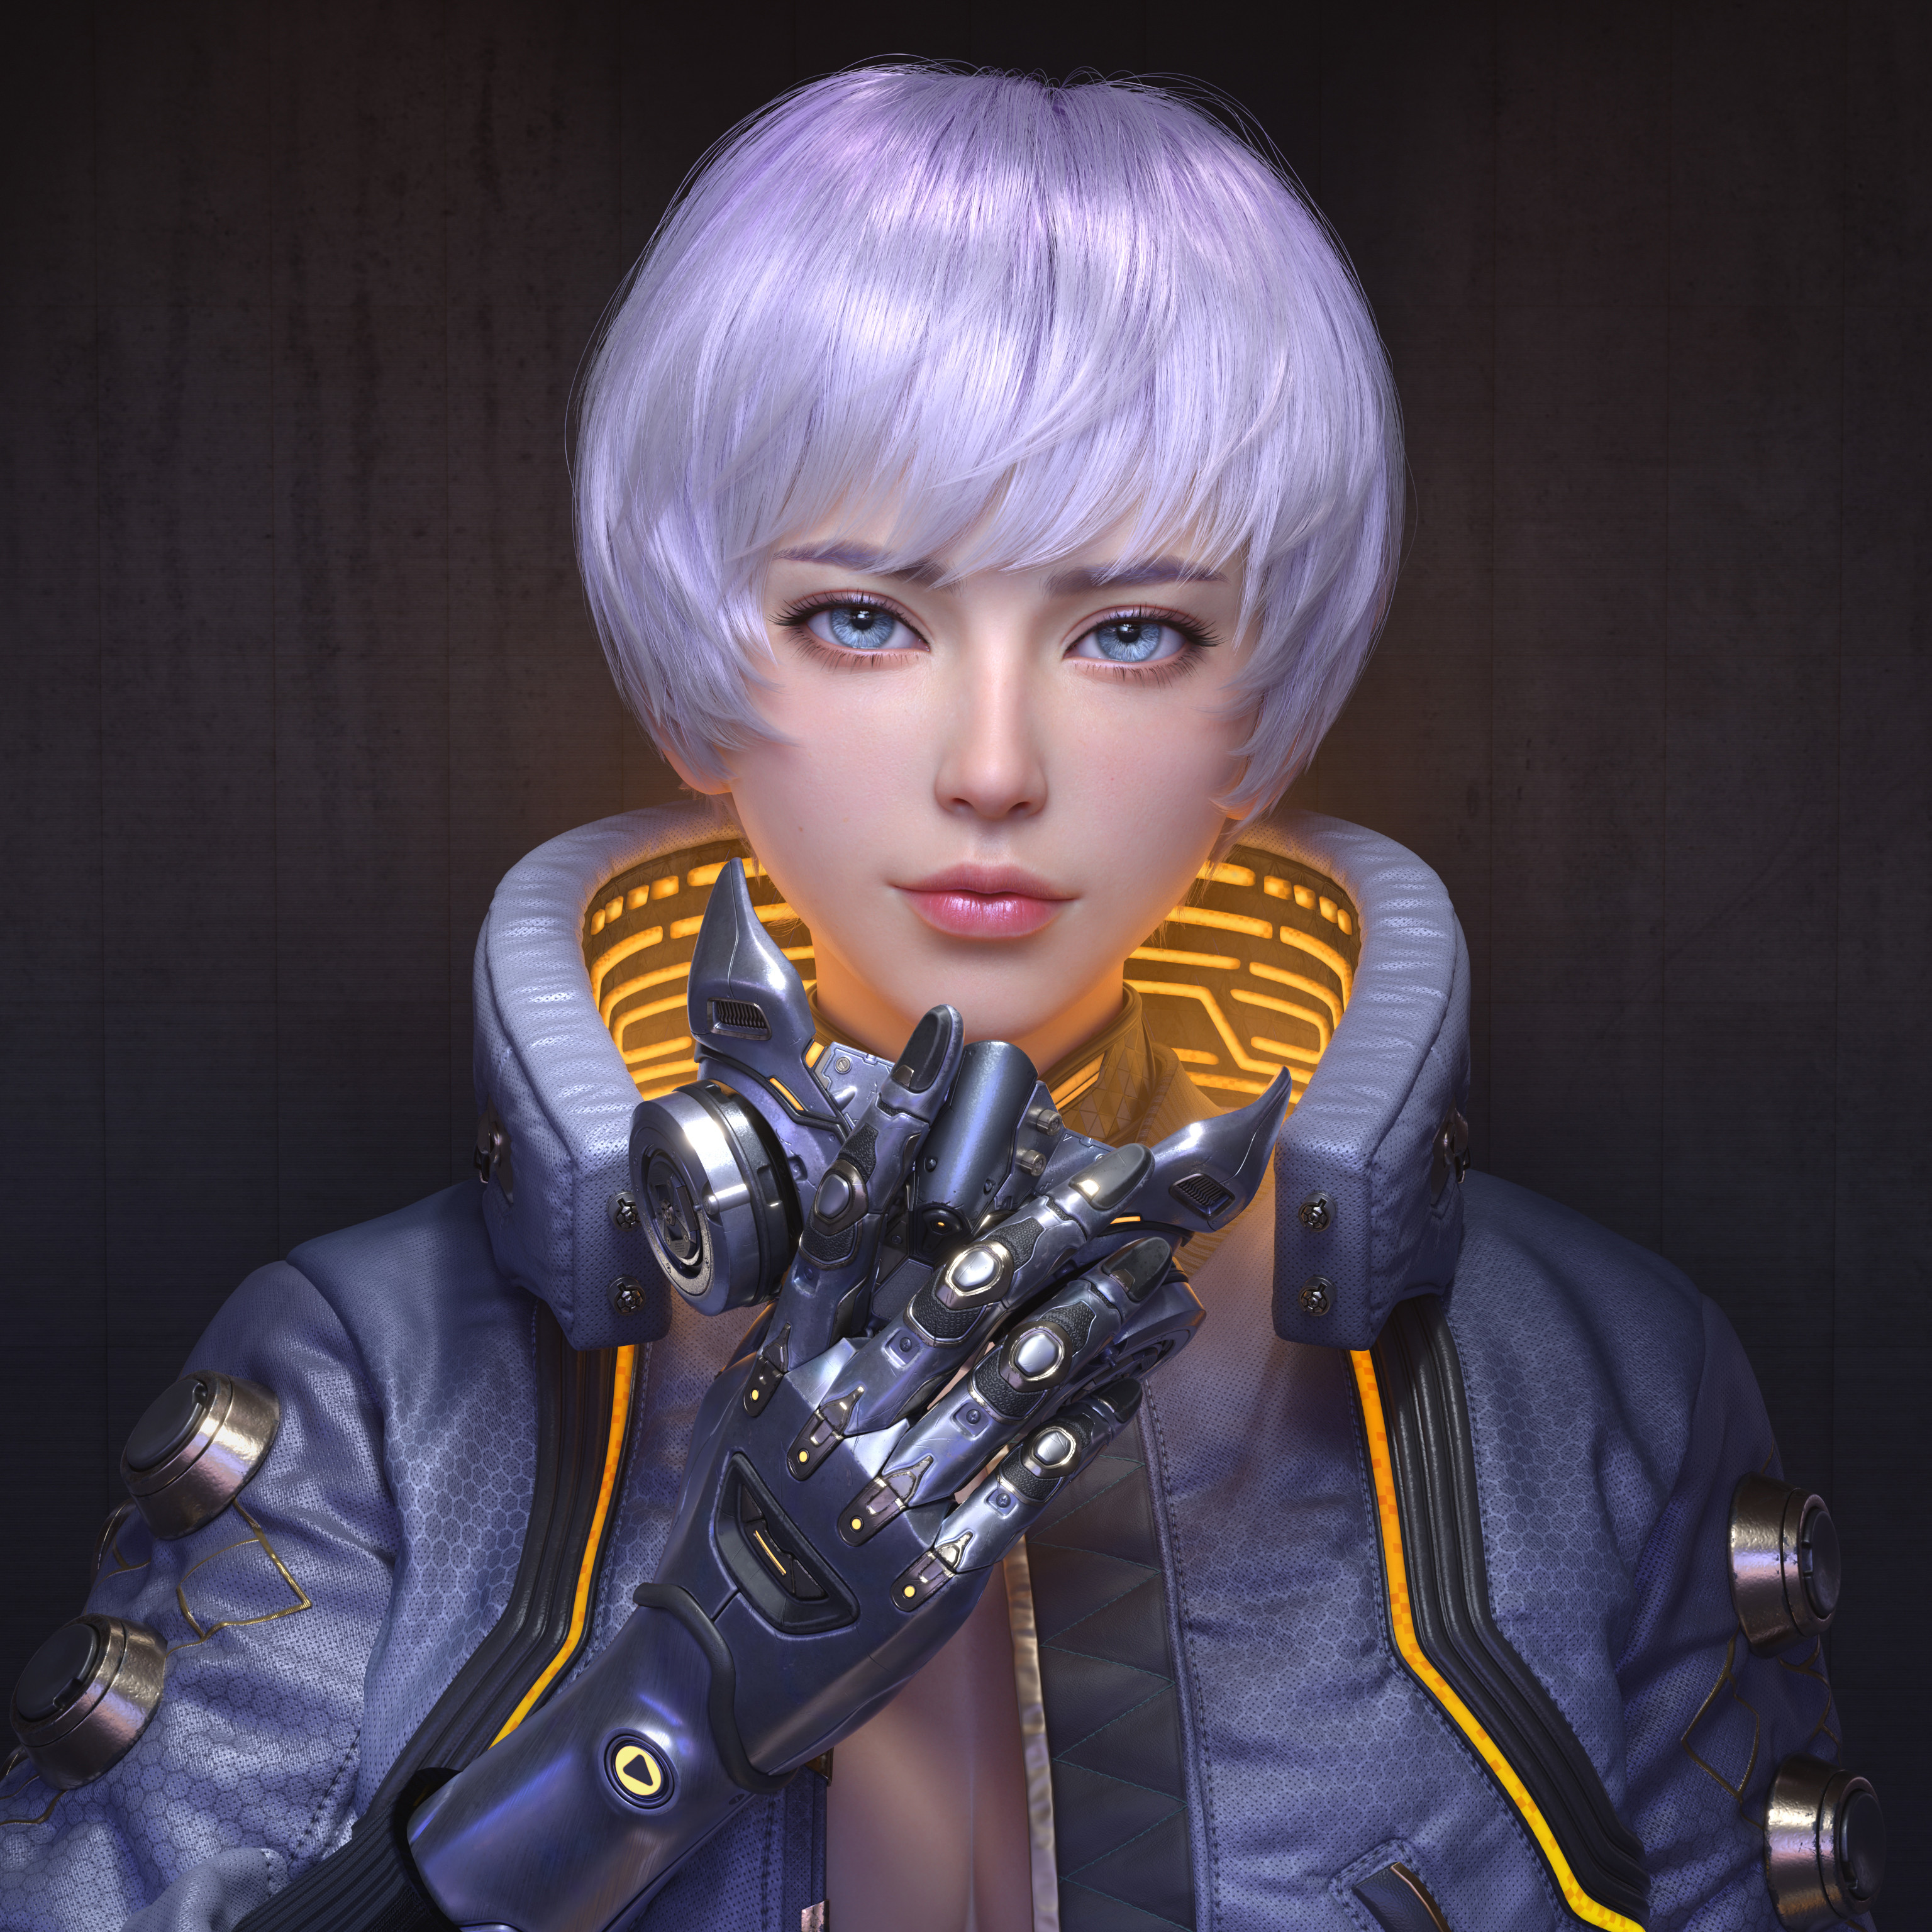 General 3072x3072 Huifeng Huang CGI women androids short hair purple hair bangs blue eyes jacket cyberpunk mask